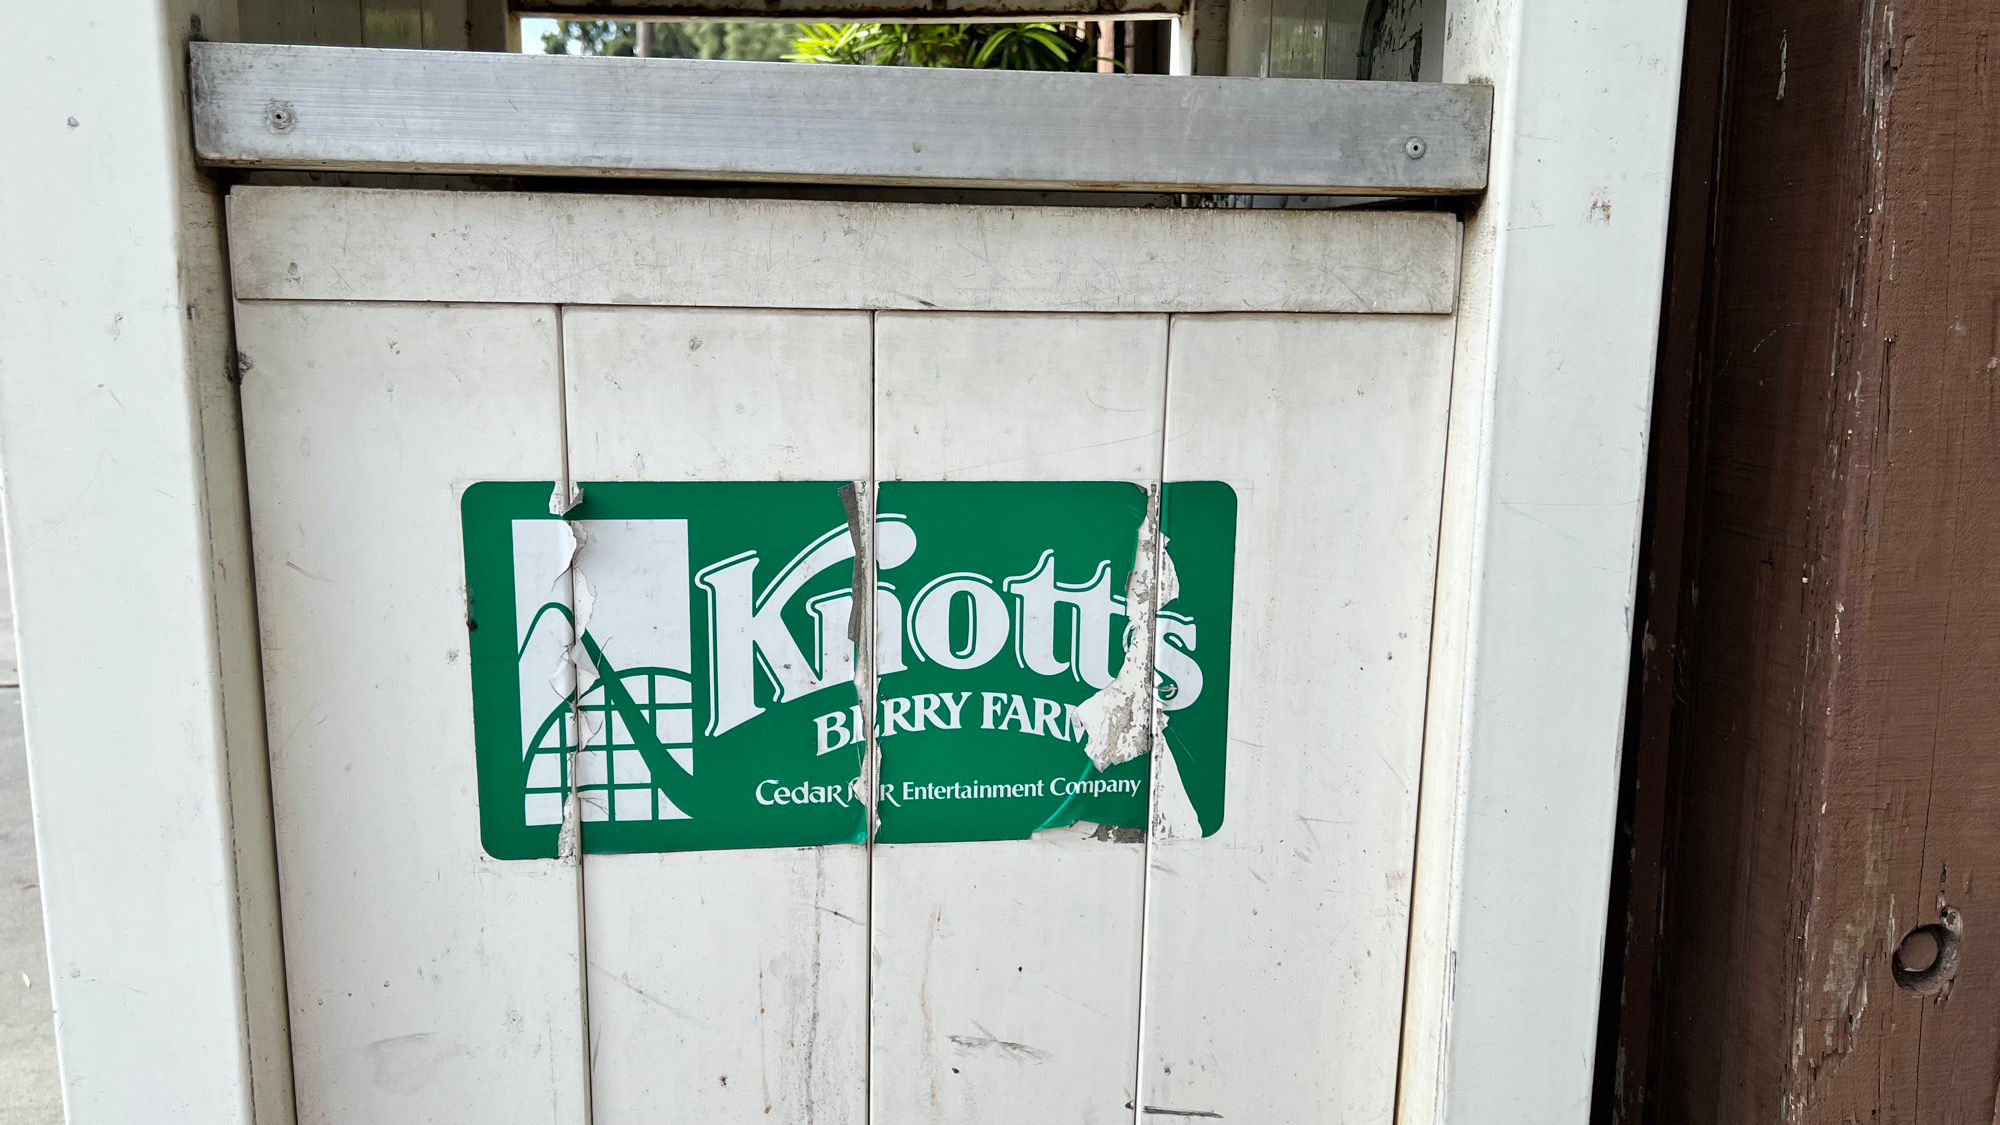 Knott's Berry Farm Employment Center Cedar Fair Entertainment Company